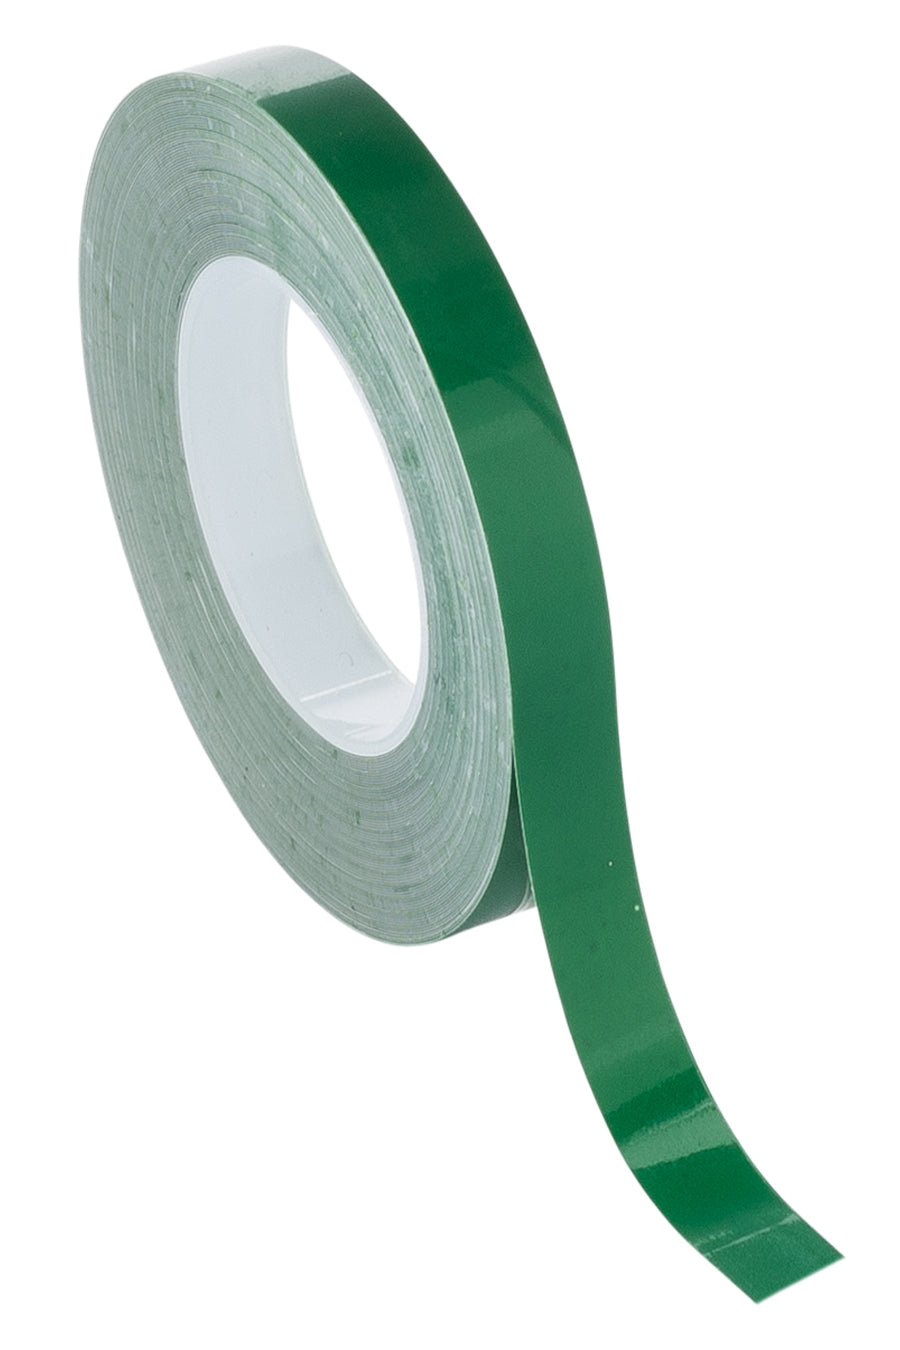 Chartpak 1/4" x 324" Green Glossy Tape